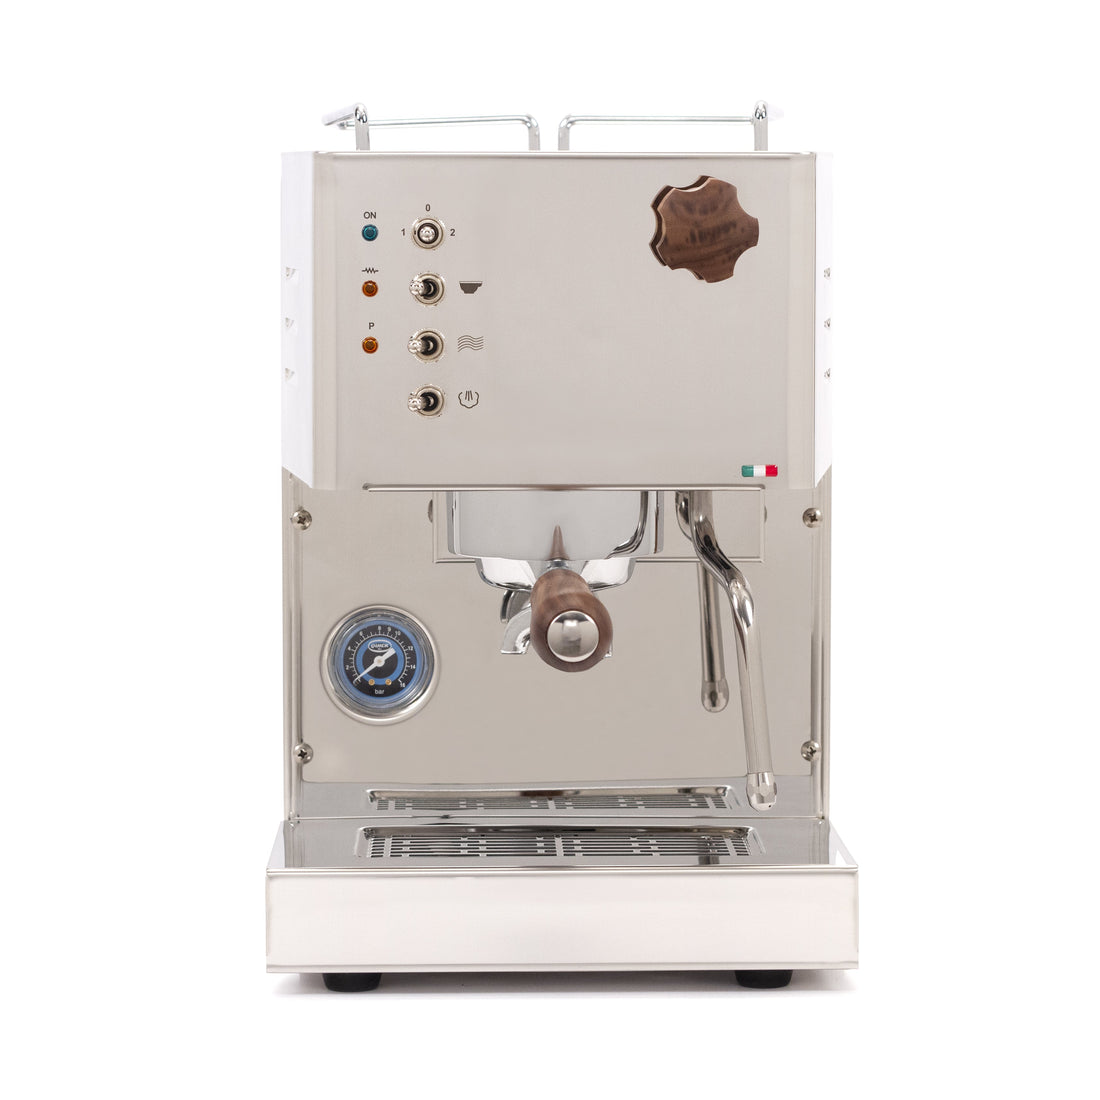 Quick Mill Pippa espresso machine from the front.